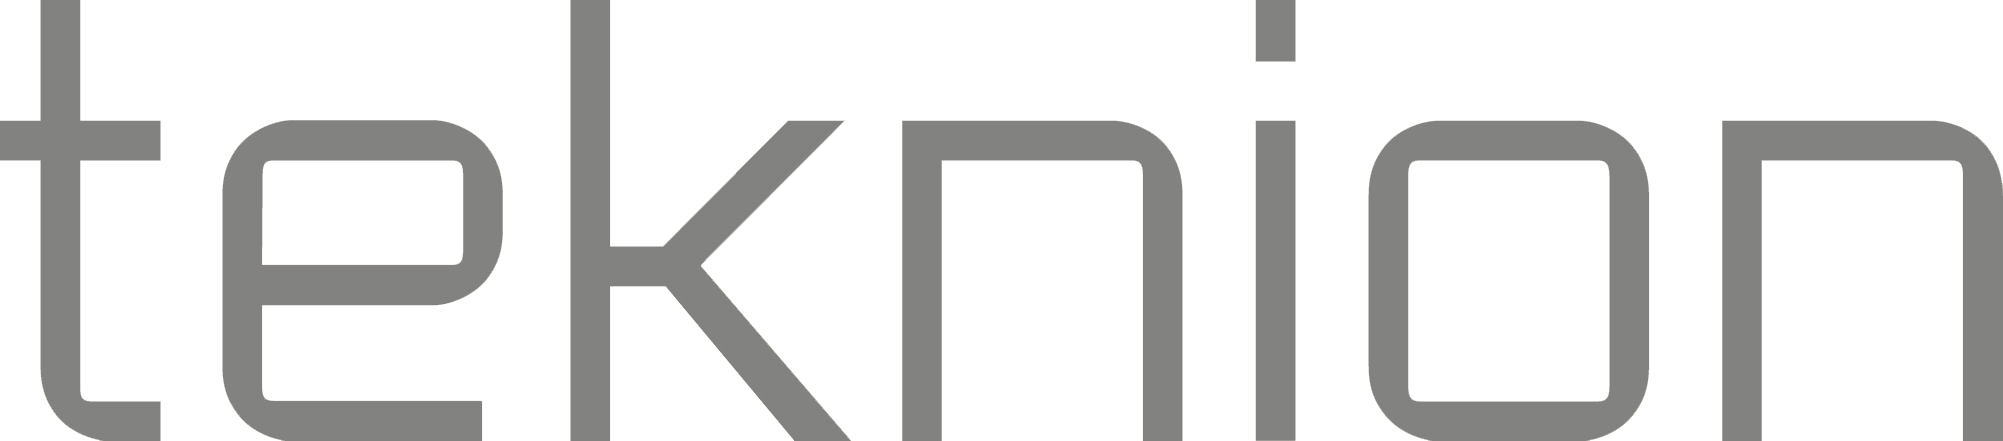 Teknion-Logo-grey-print_transparent.png